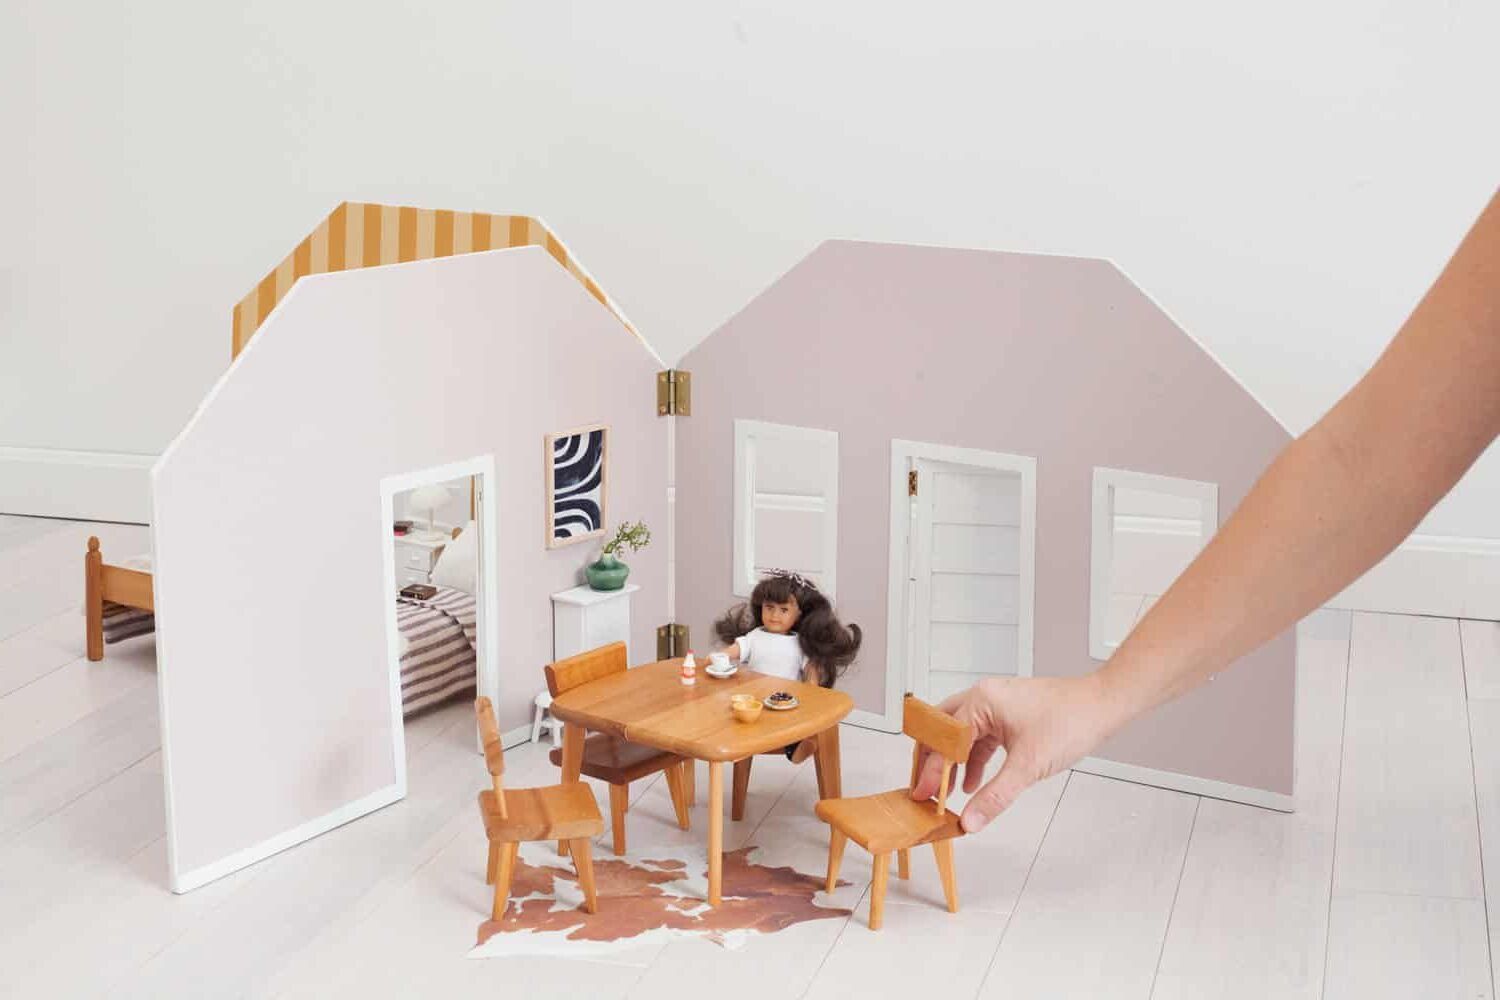 Dazzling DIY Dollhouse: Create Your Own Miniature Dream Home